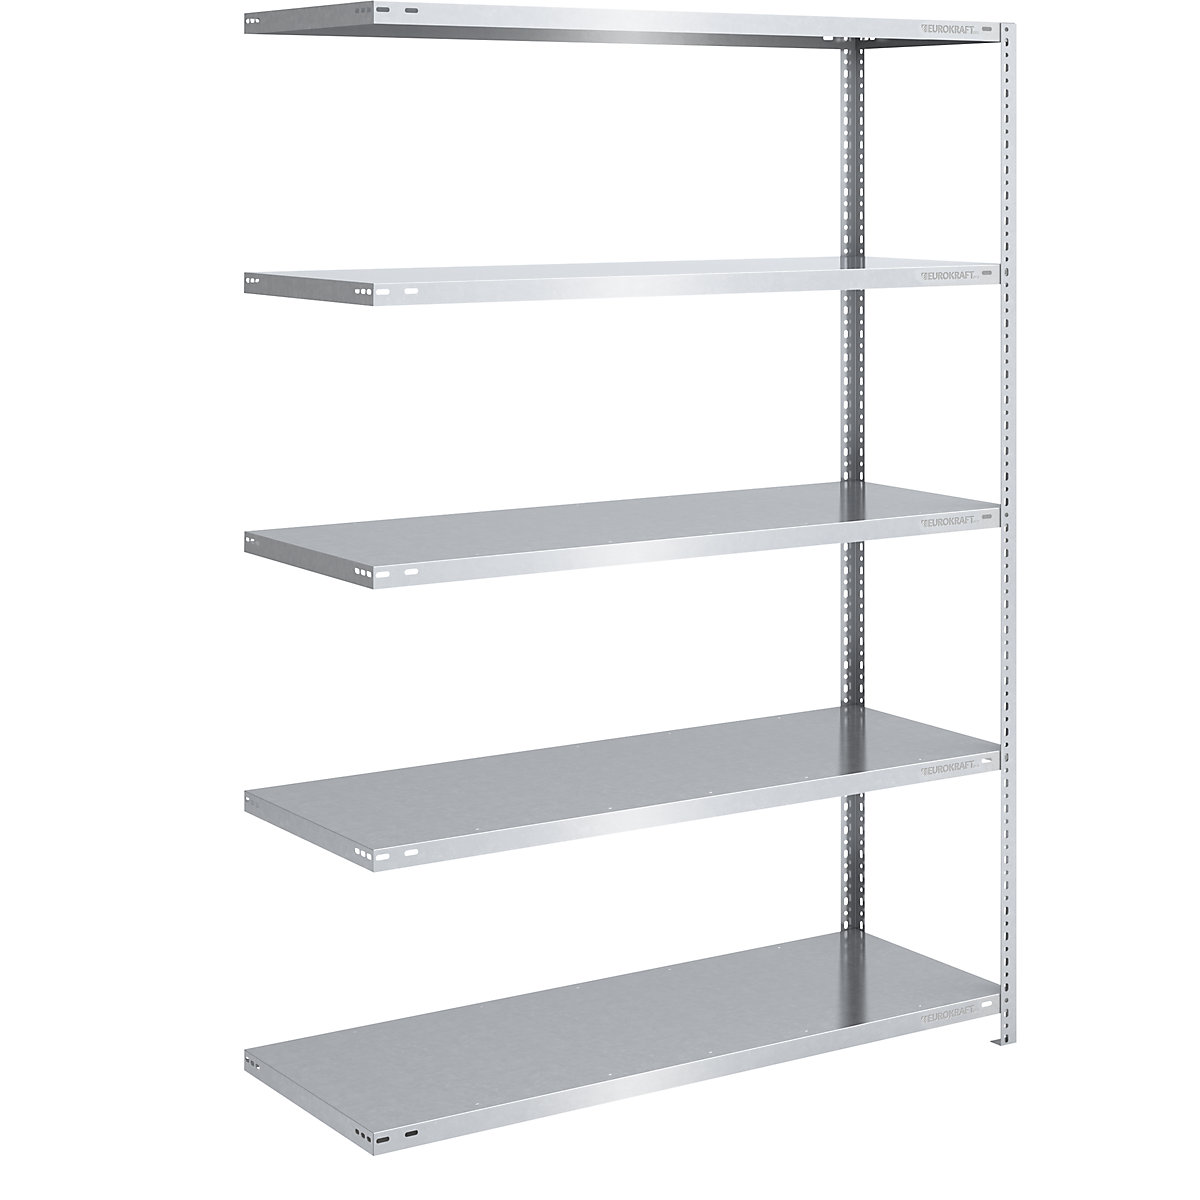 Bolt-together storage shelving, zinc plated, medium duty – eurokraft pro, shelf unit height 2000 mm, shelf width 1300 mm, depth 600 mm, extension shelf unit-10